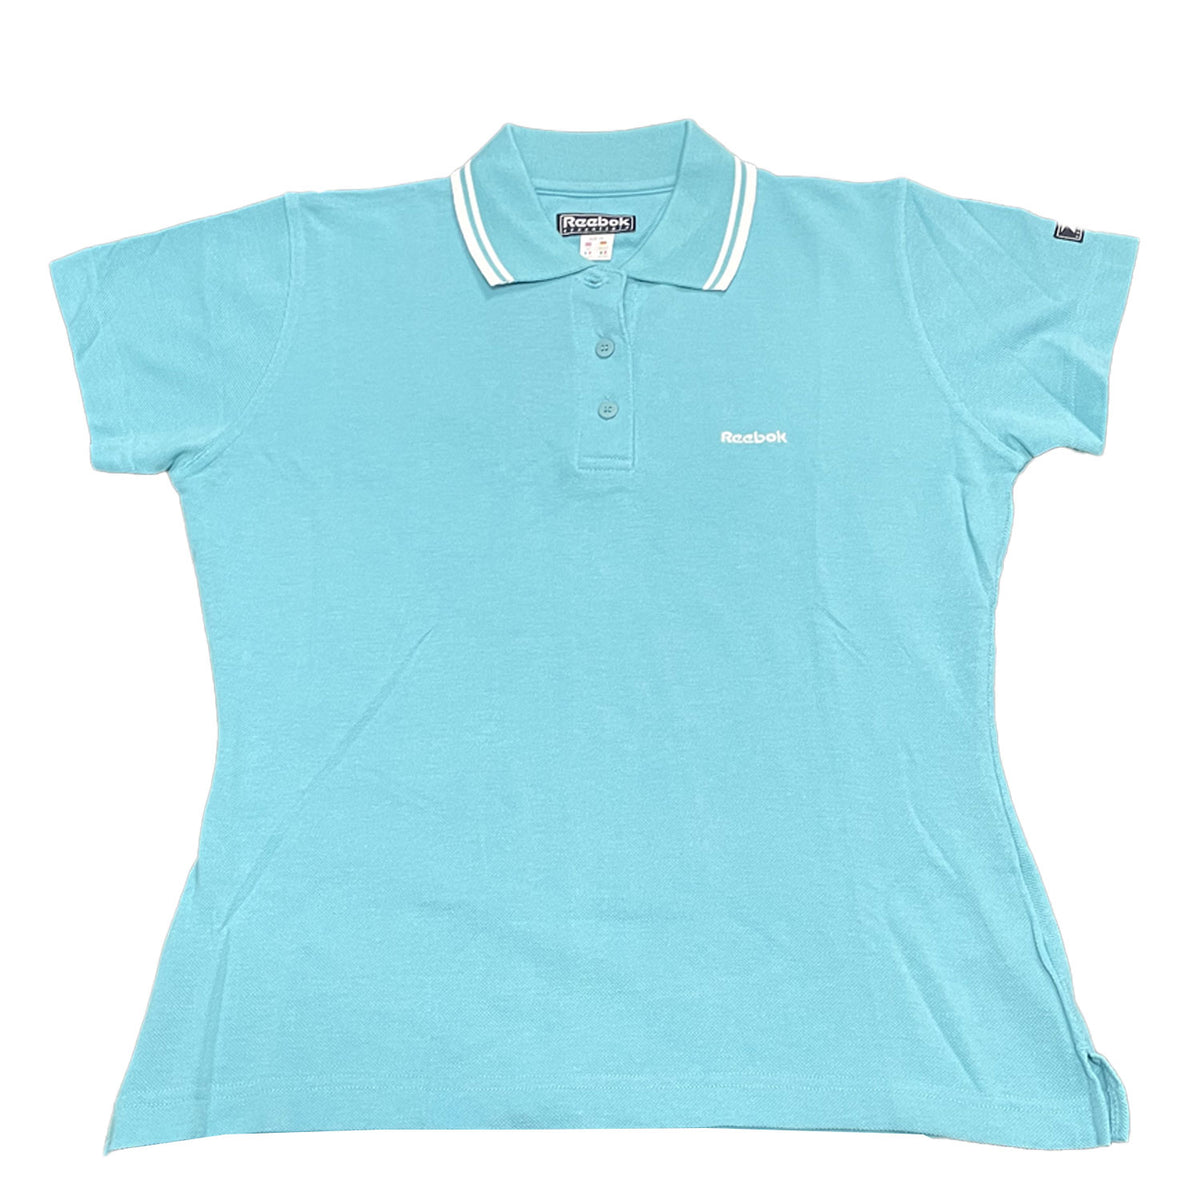 Reebok Womens Athletic Department Polo Shirt - Blue - UK Size 12